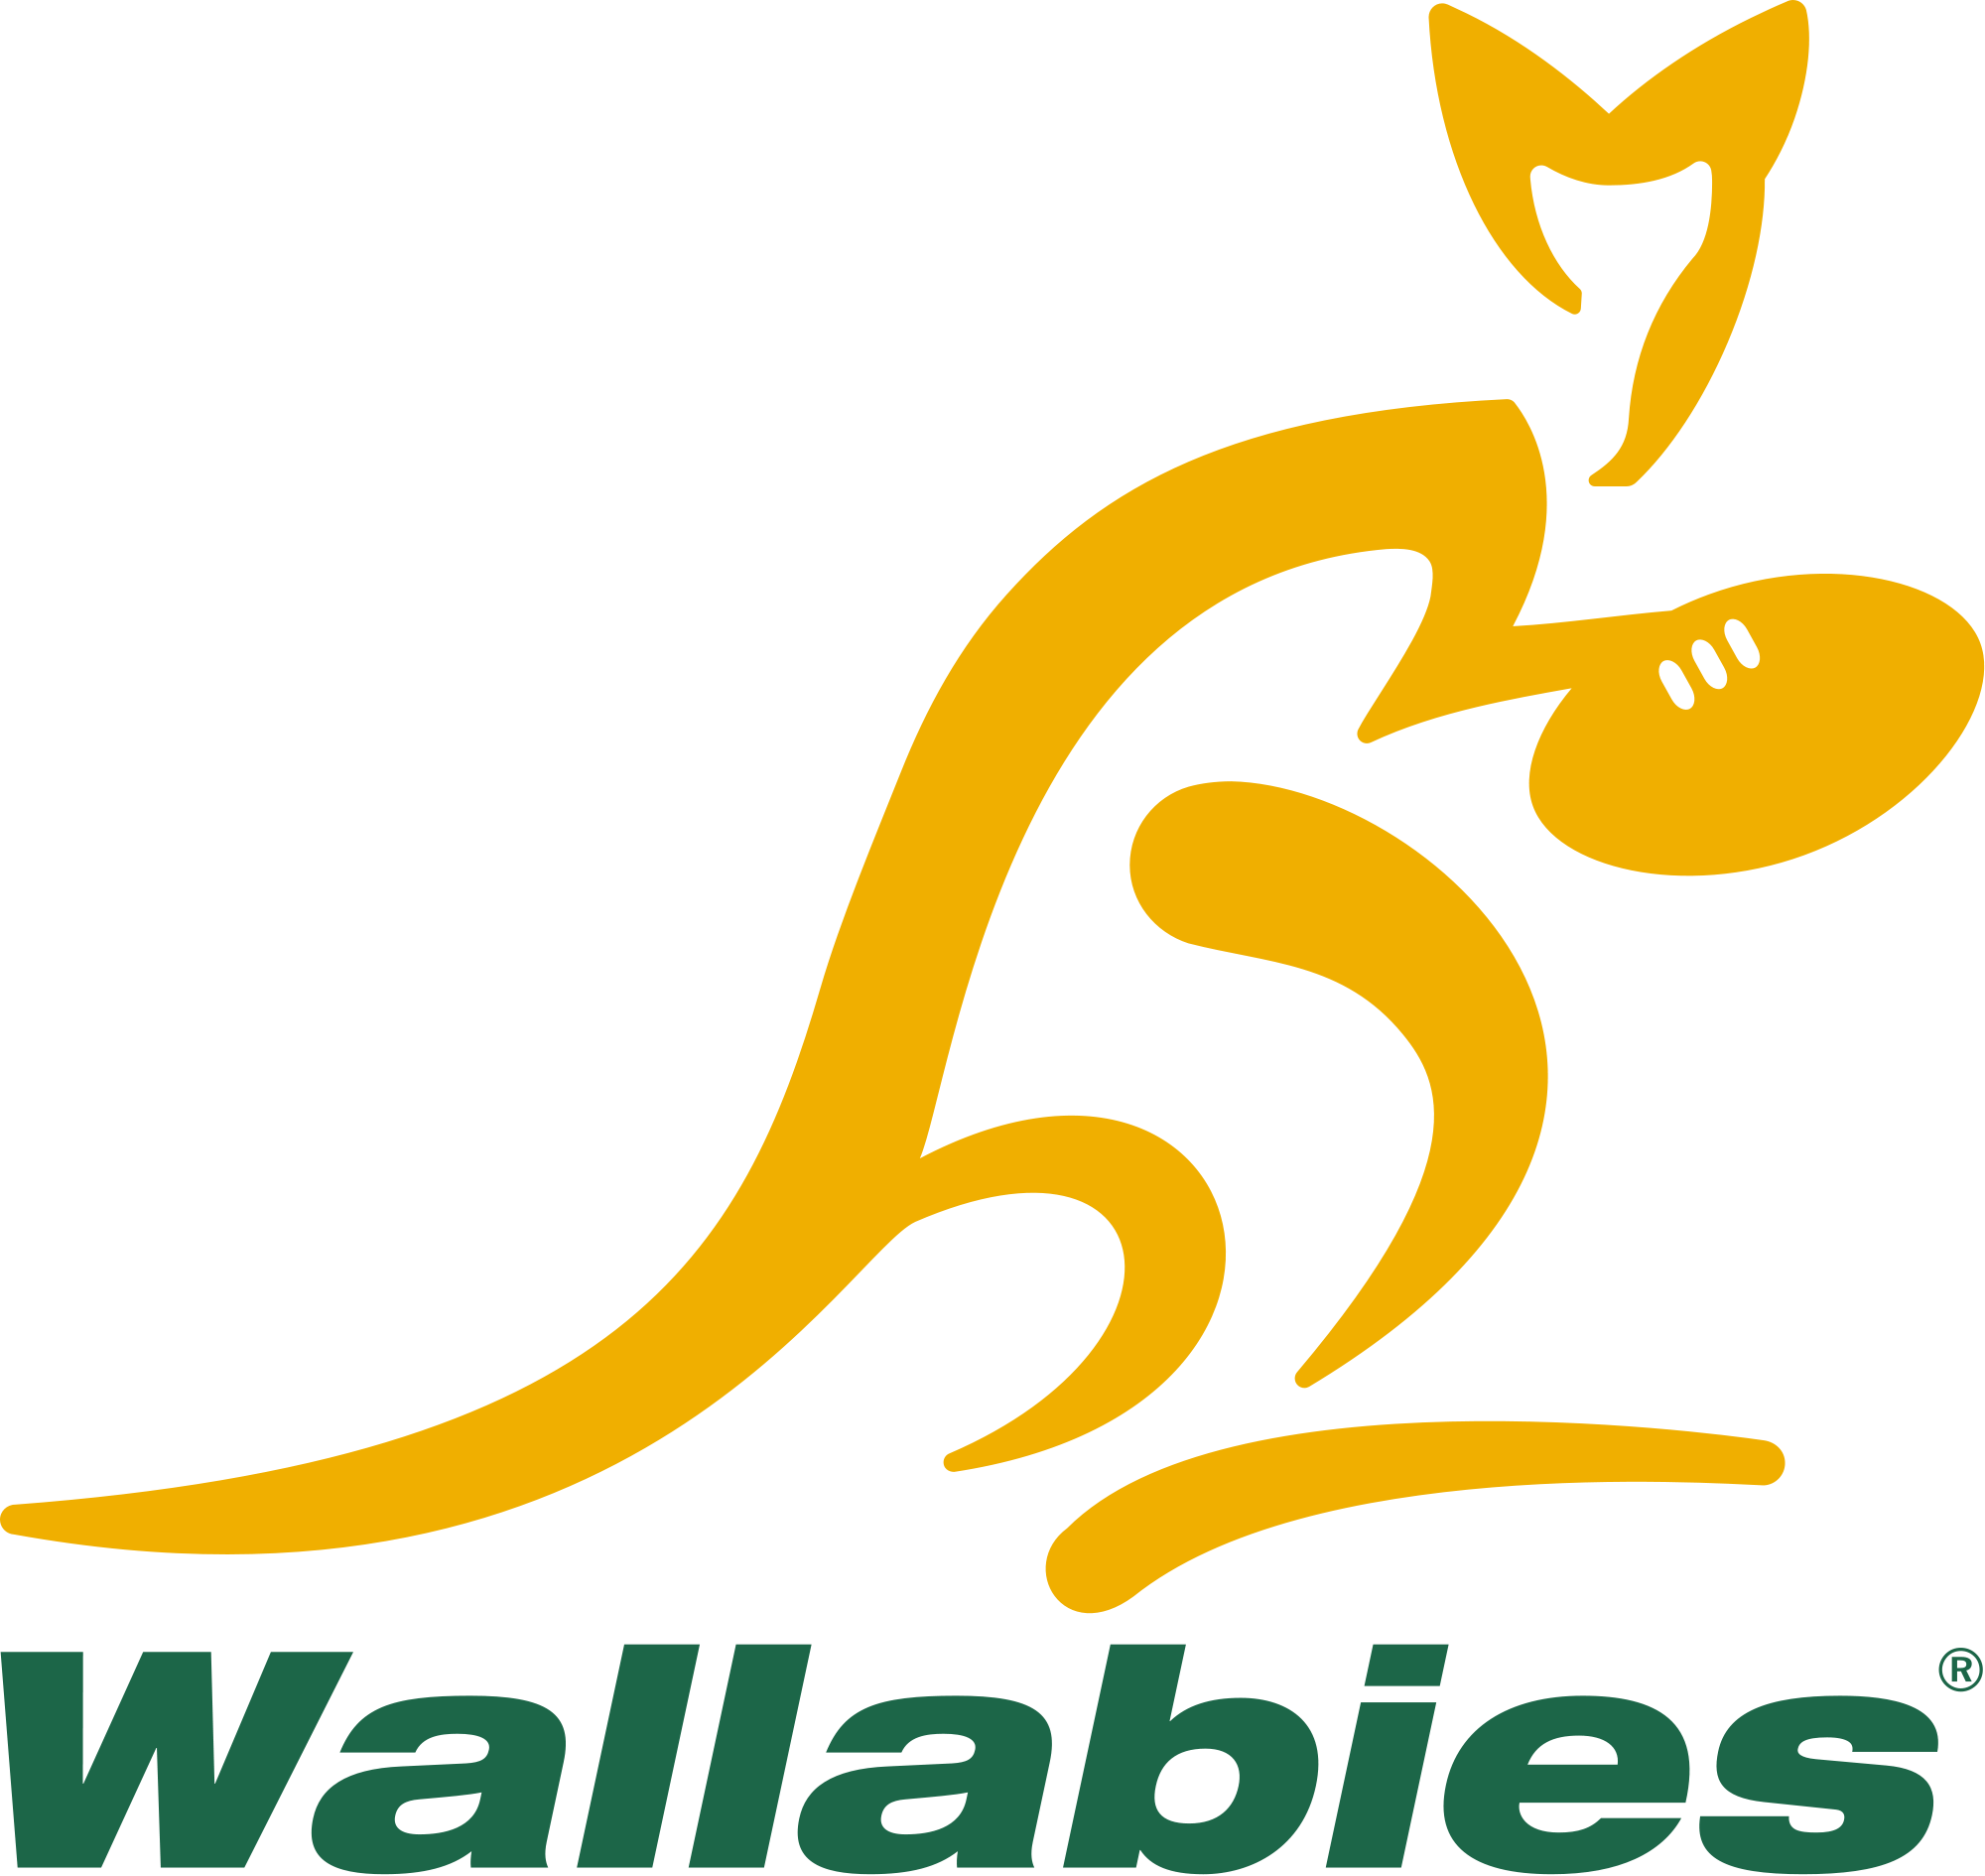 The Wallabies, the Australian rugby union team. The Australian team